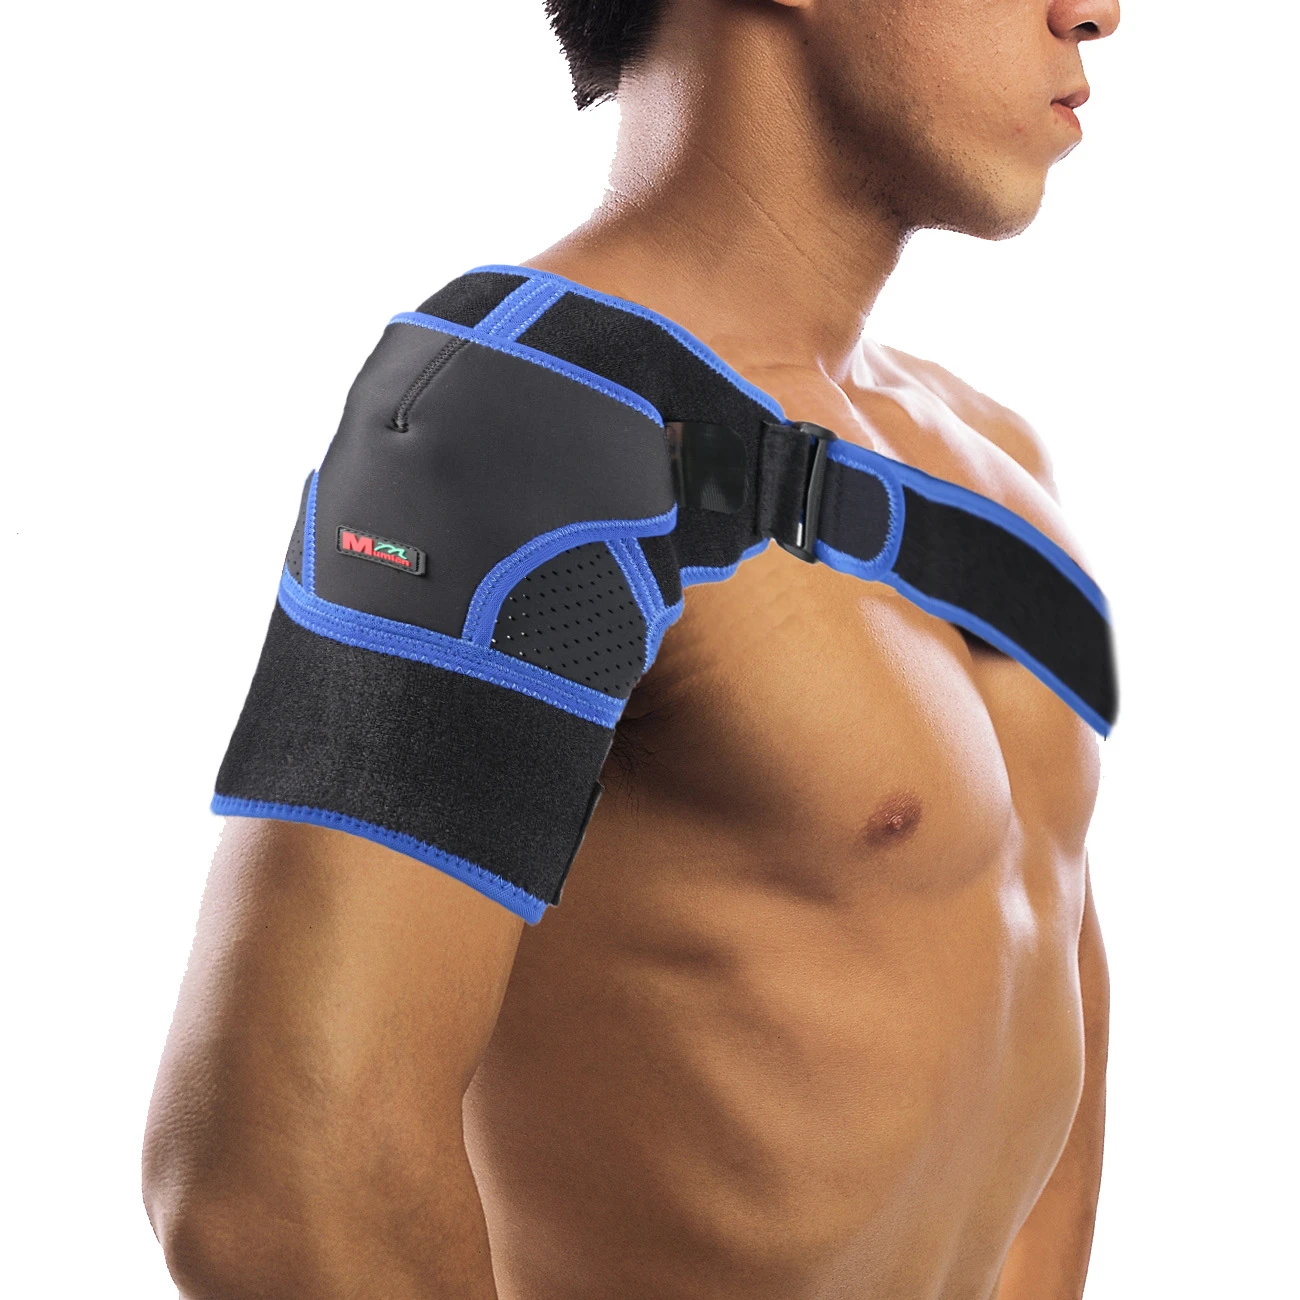 Super Hot Selling Four-Way Adjustable Pressure Breathable Shoulder Protection around G06 Available Dark Black men wearing scarves